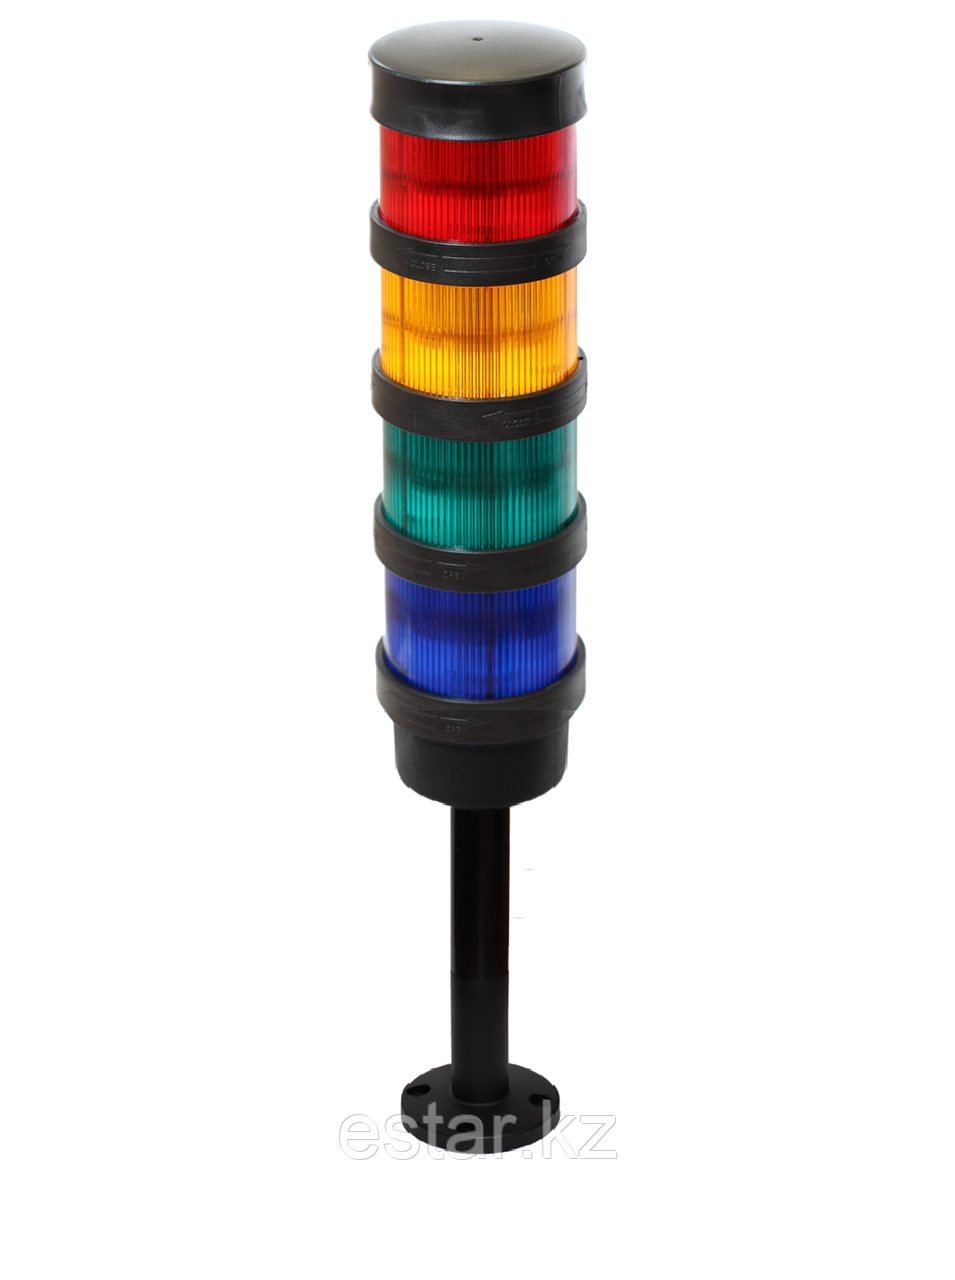 Светодиодная сигнальная колонна диаметром 70 мм TL70B-024-RYGB-155